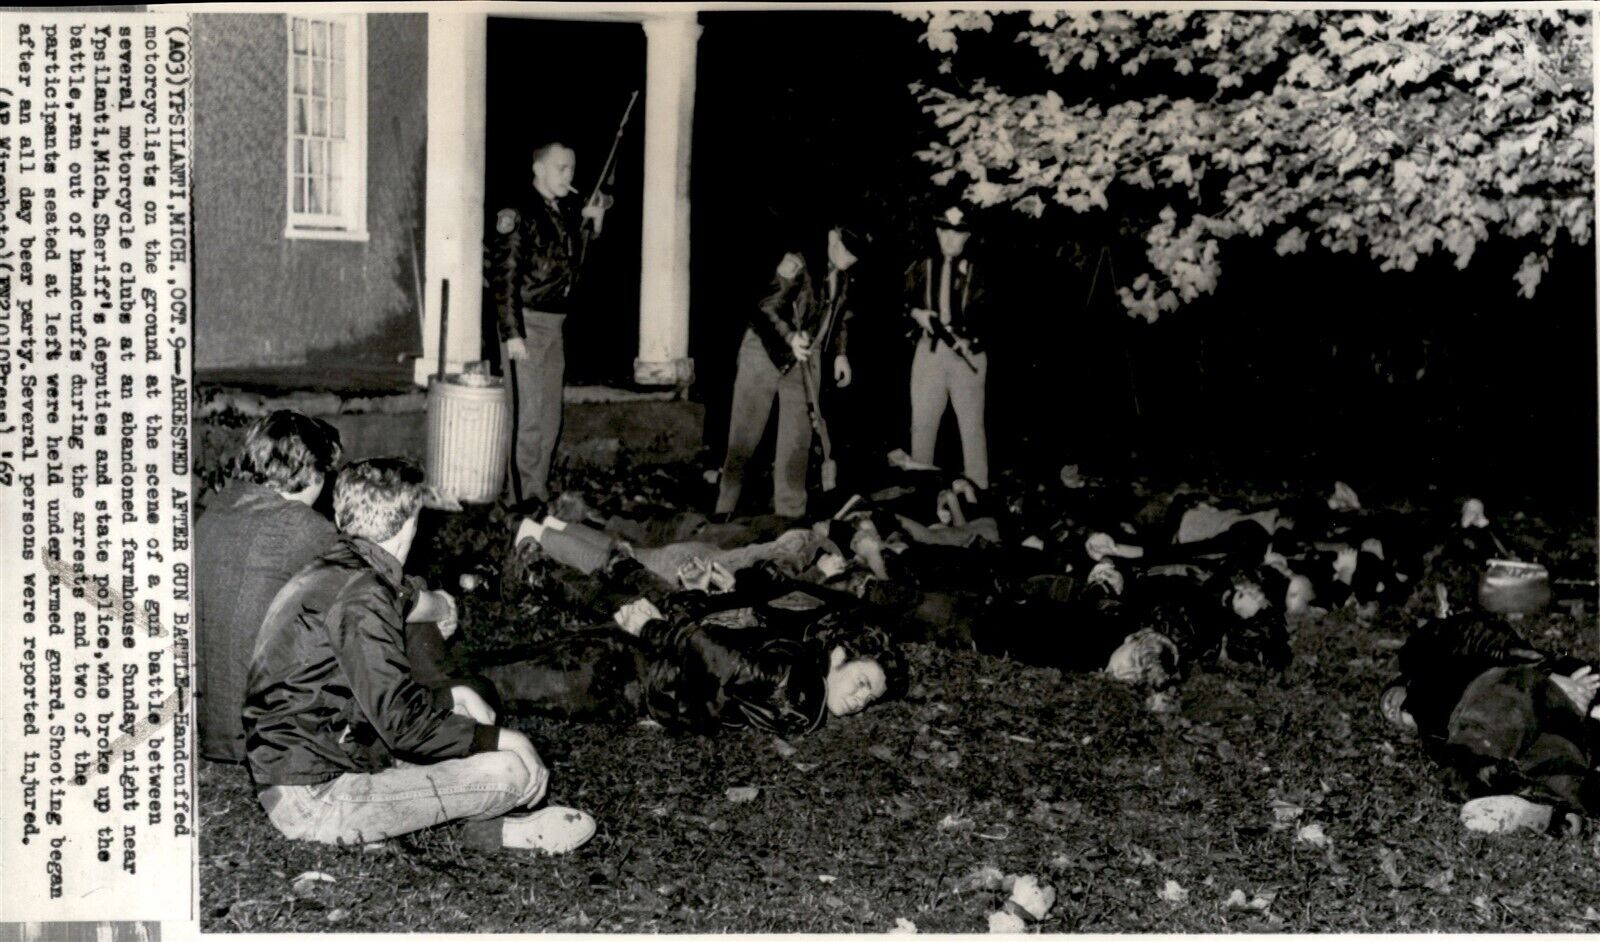 LG989 1967 Wire Photo ARRESTED AFTER GUN BATTLE Ypsilanti MI Suspects on Lawn